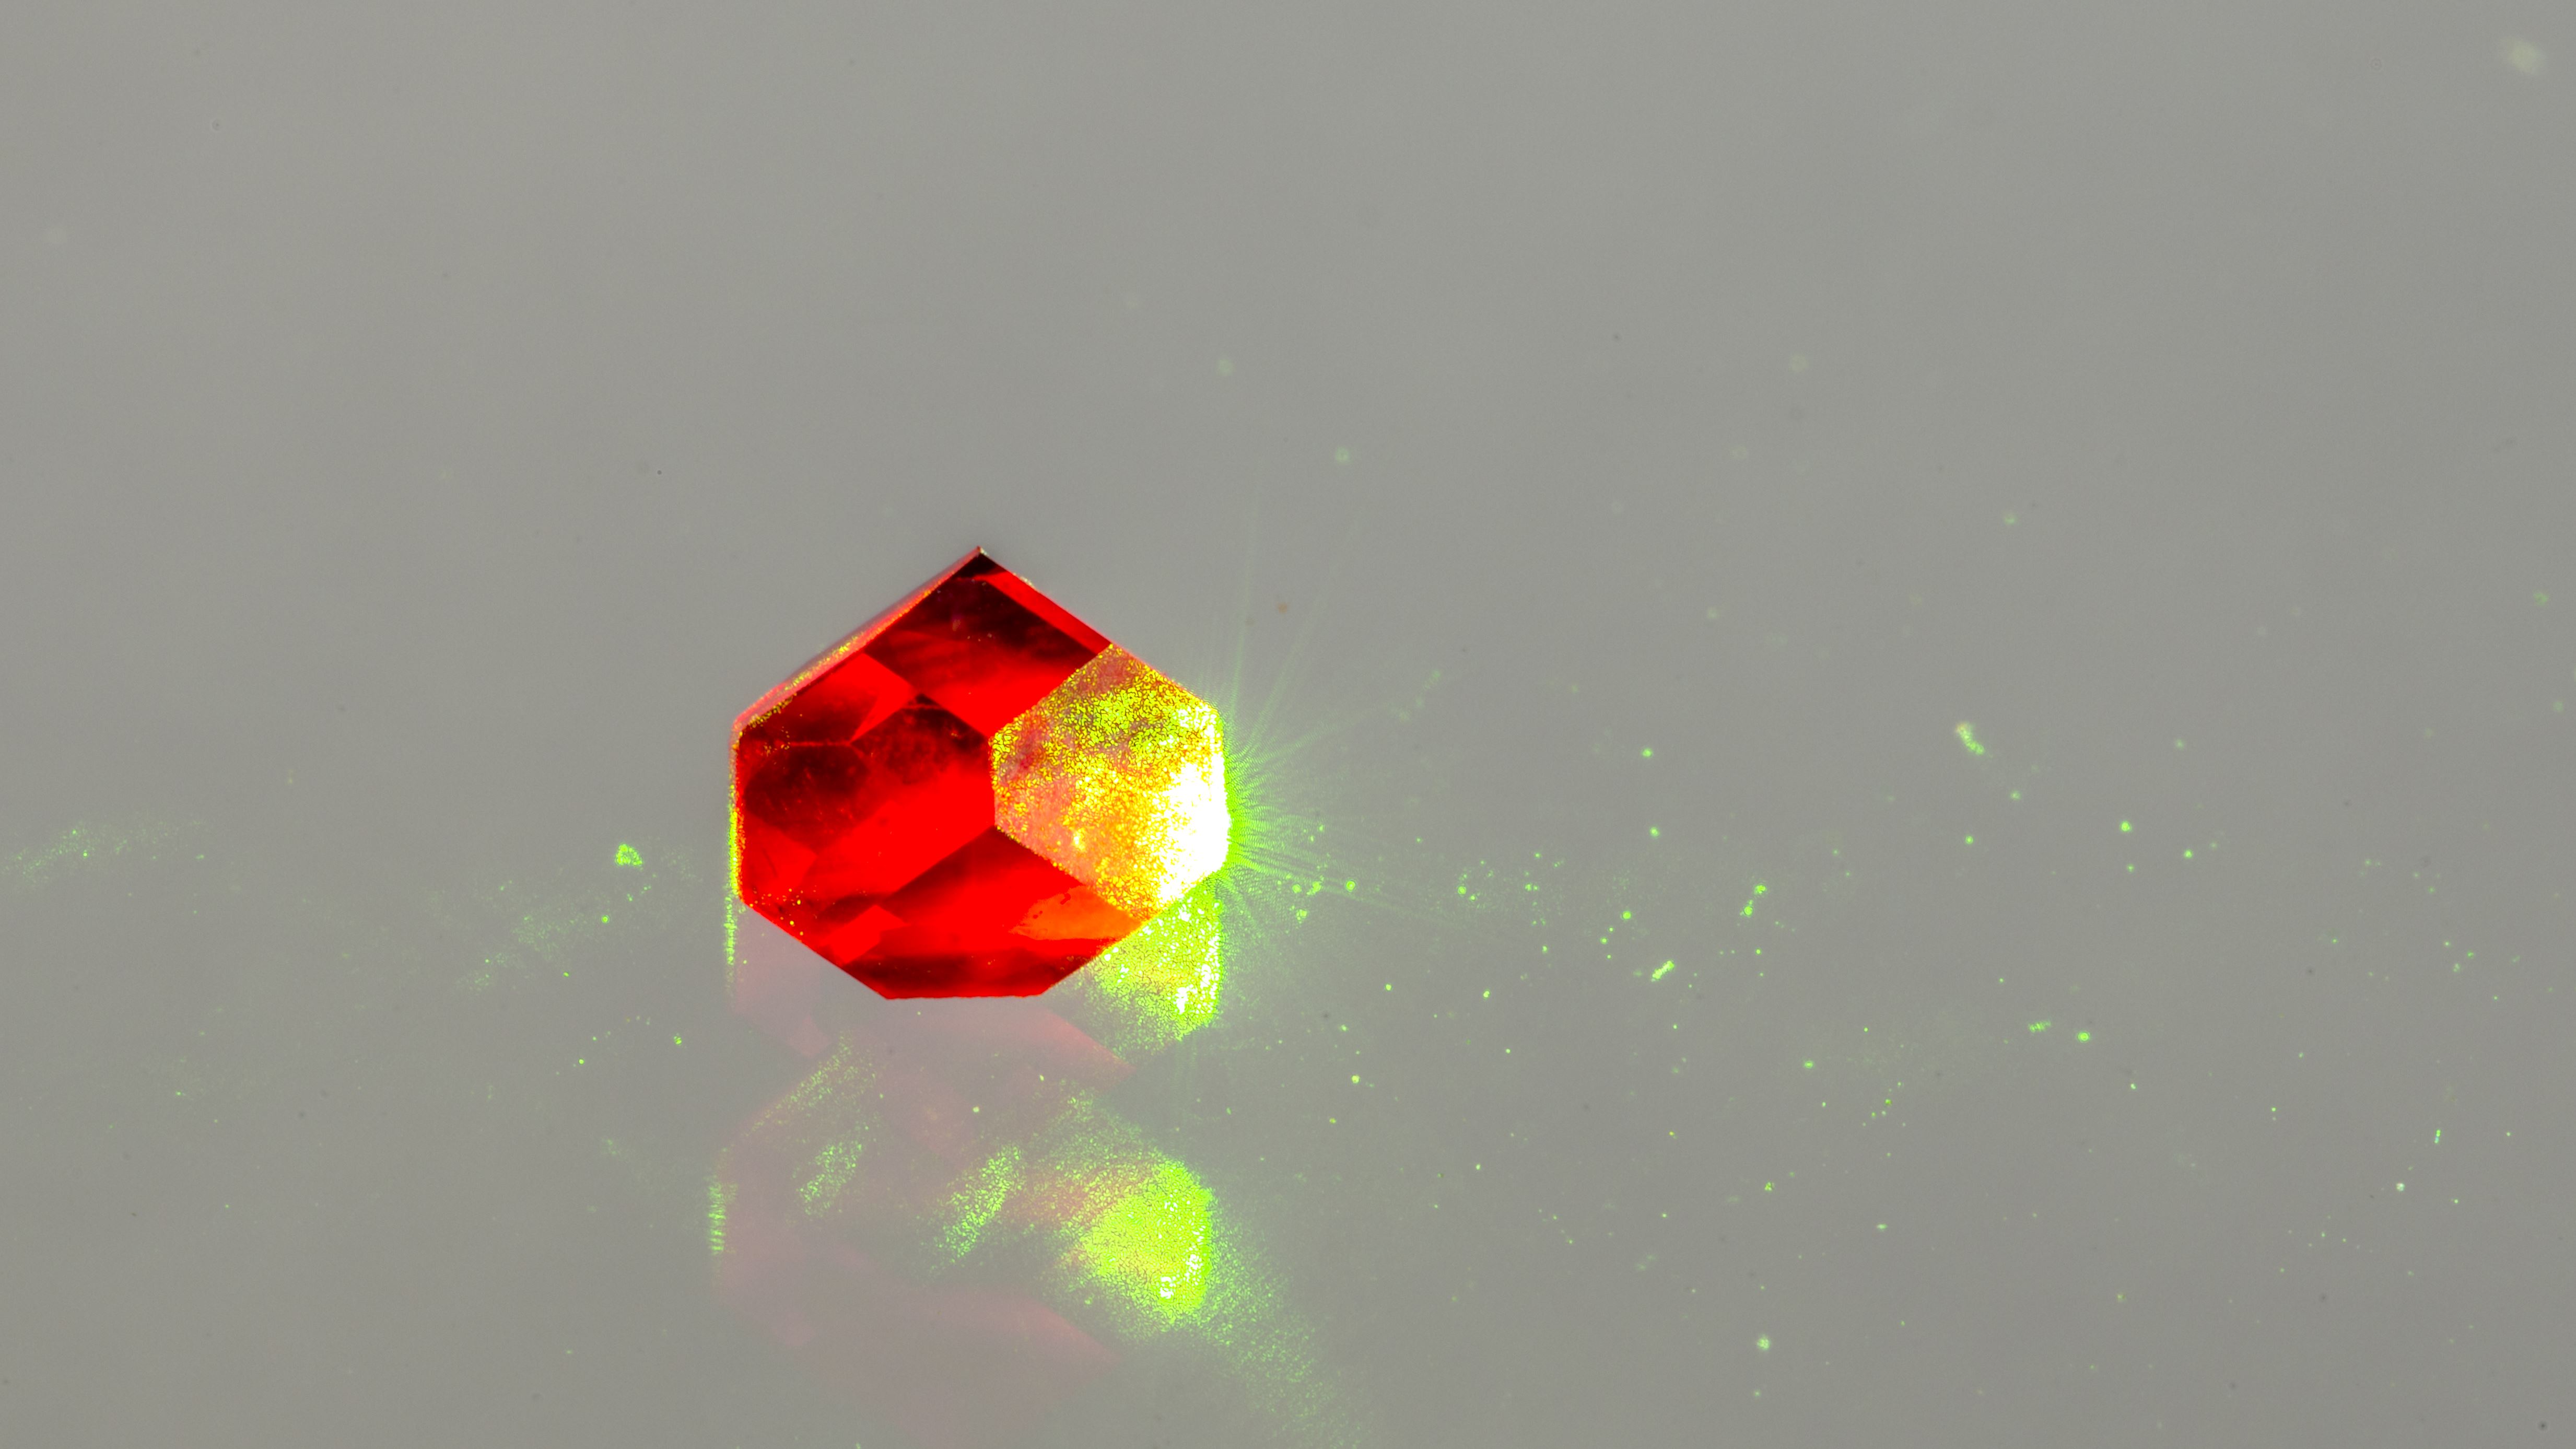 Photograph of diamond containing nitrogen vacancies fluorescing due to illumination with green light. Credit: Jon Newland